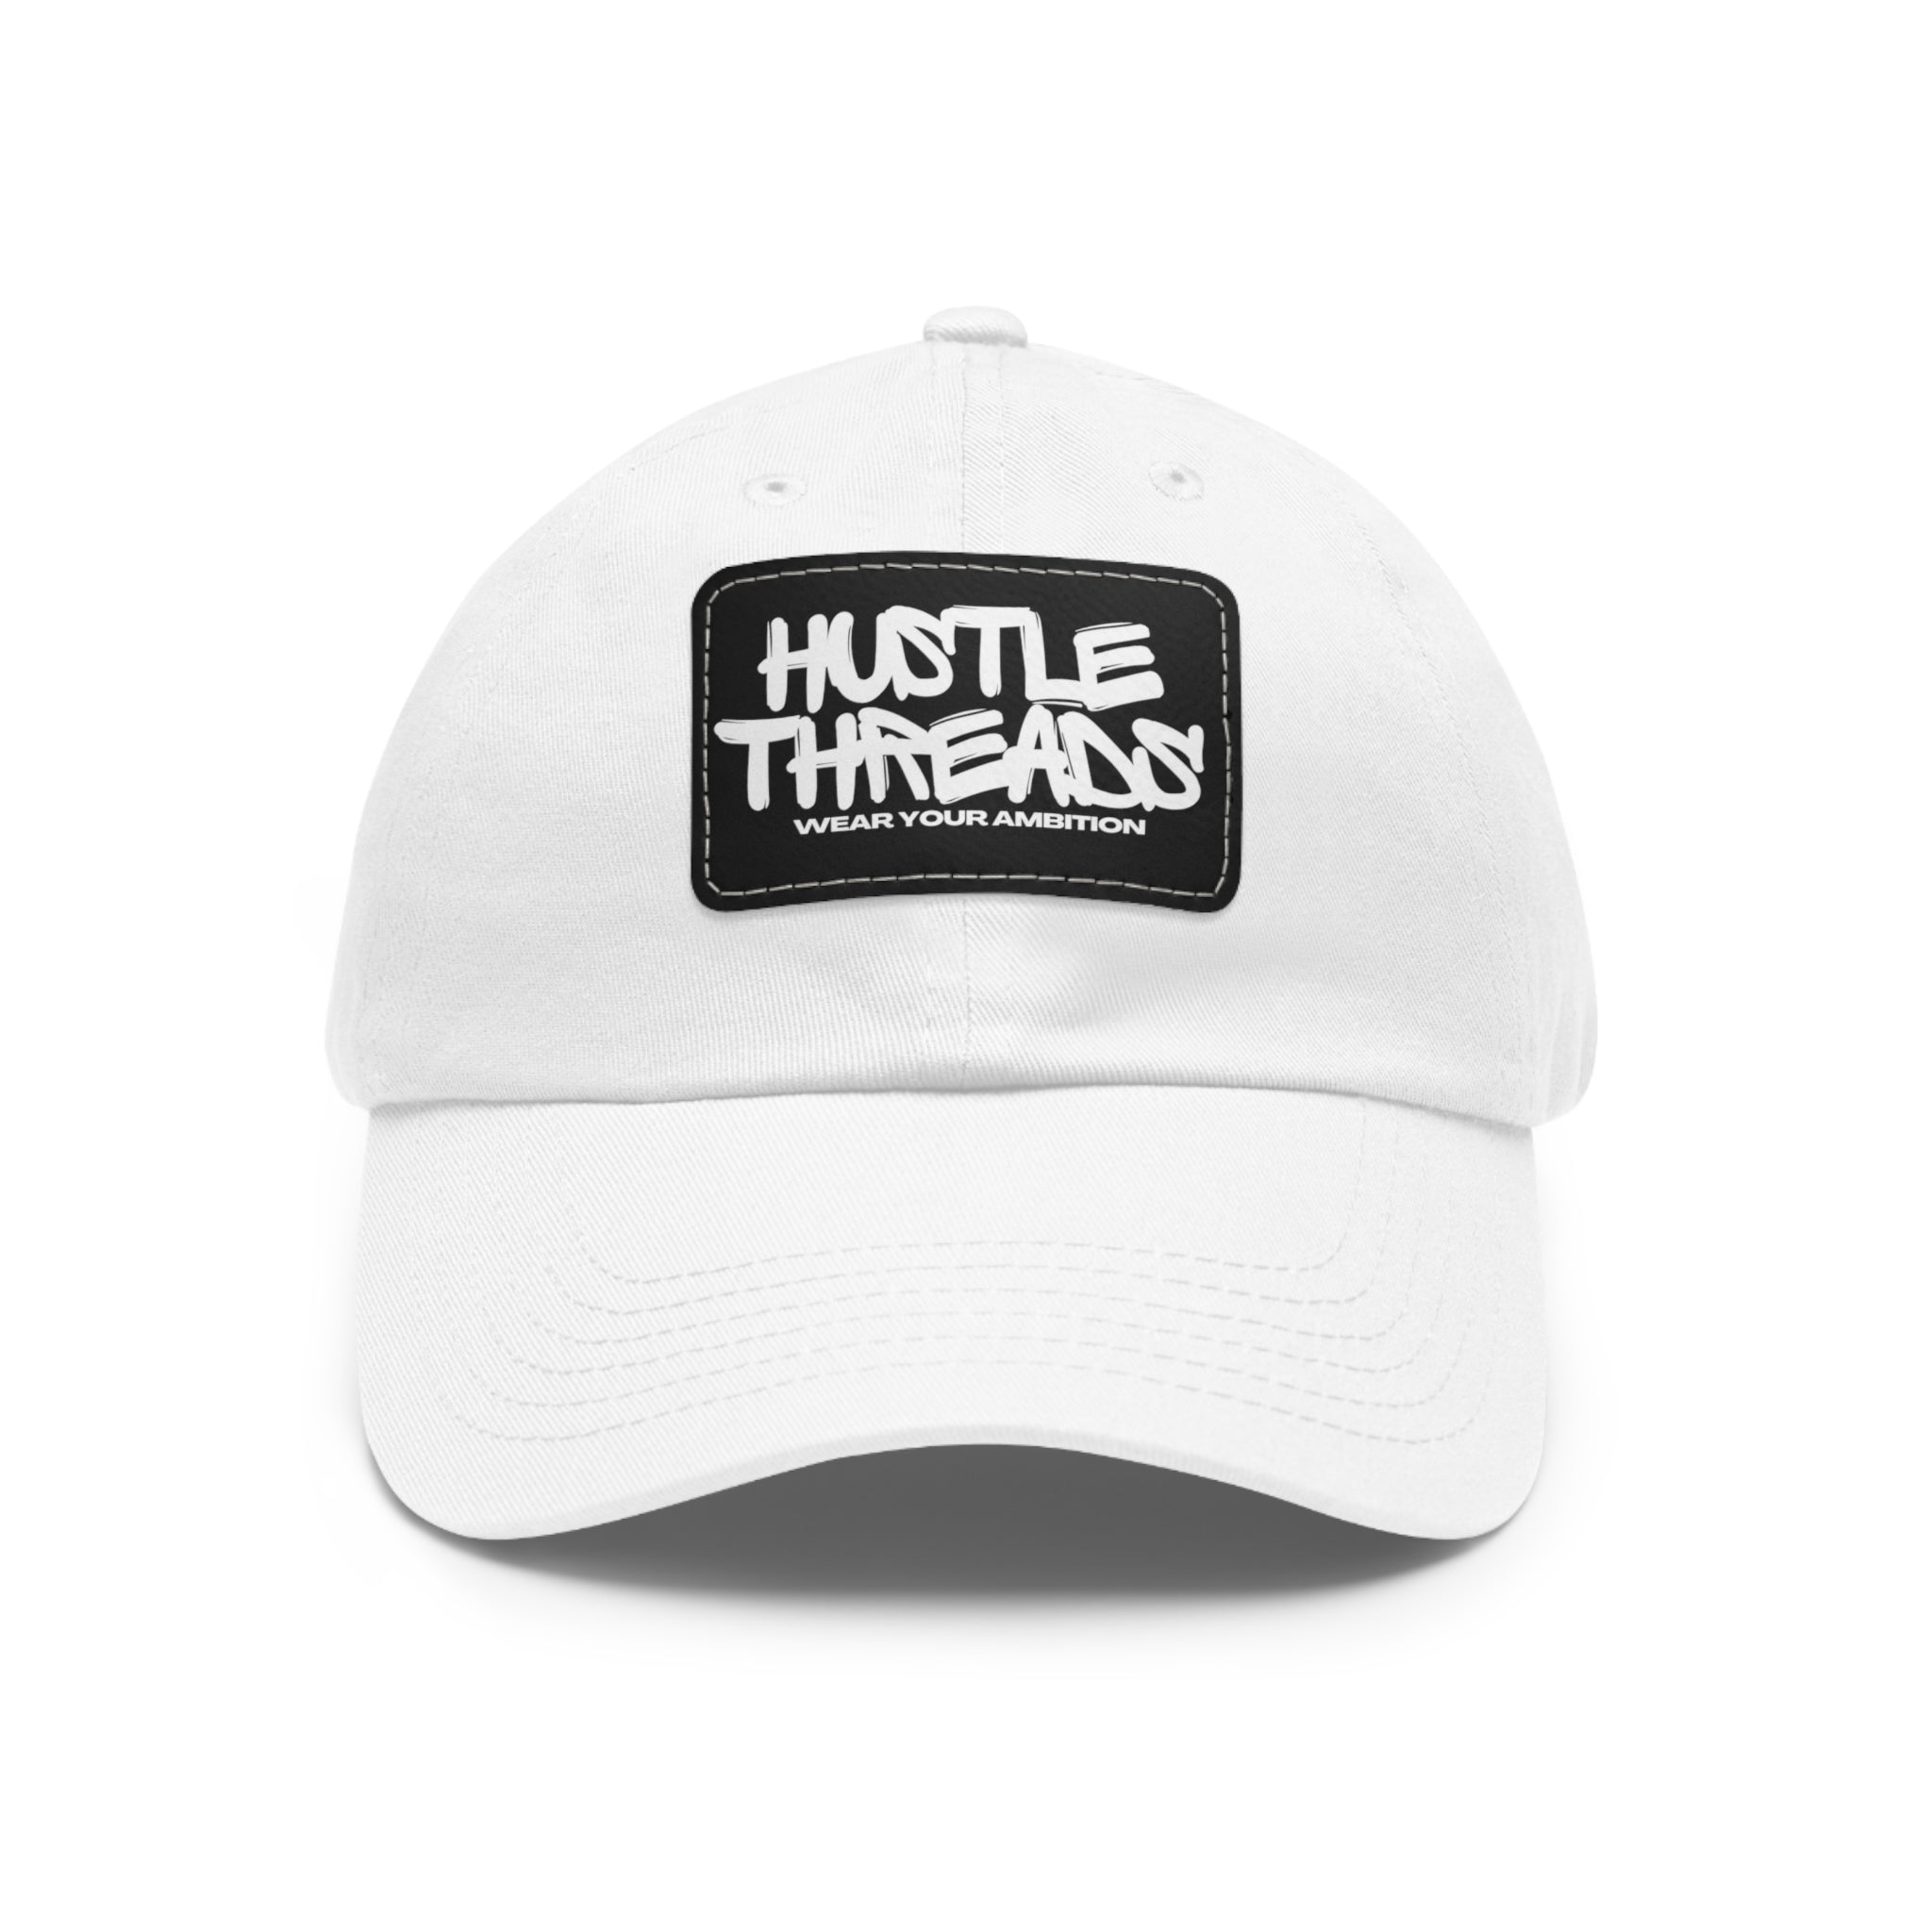 Hustle Threads Official Baseball Cap